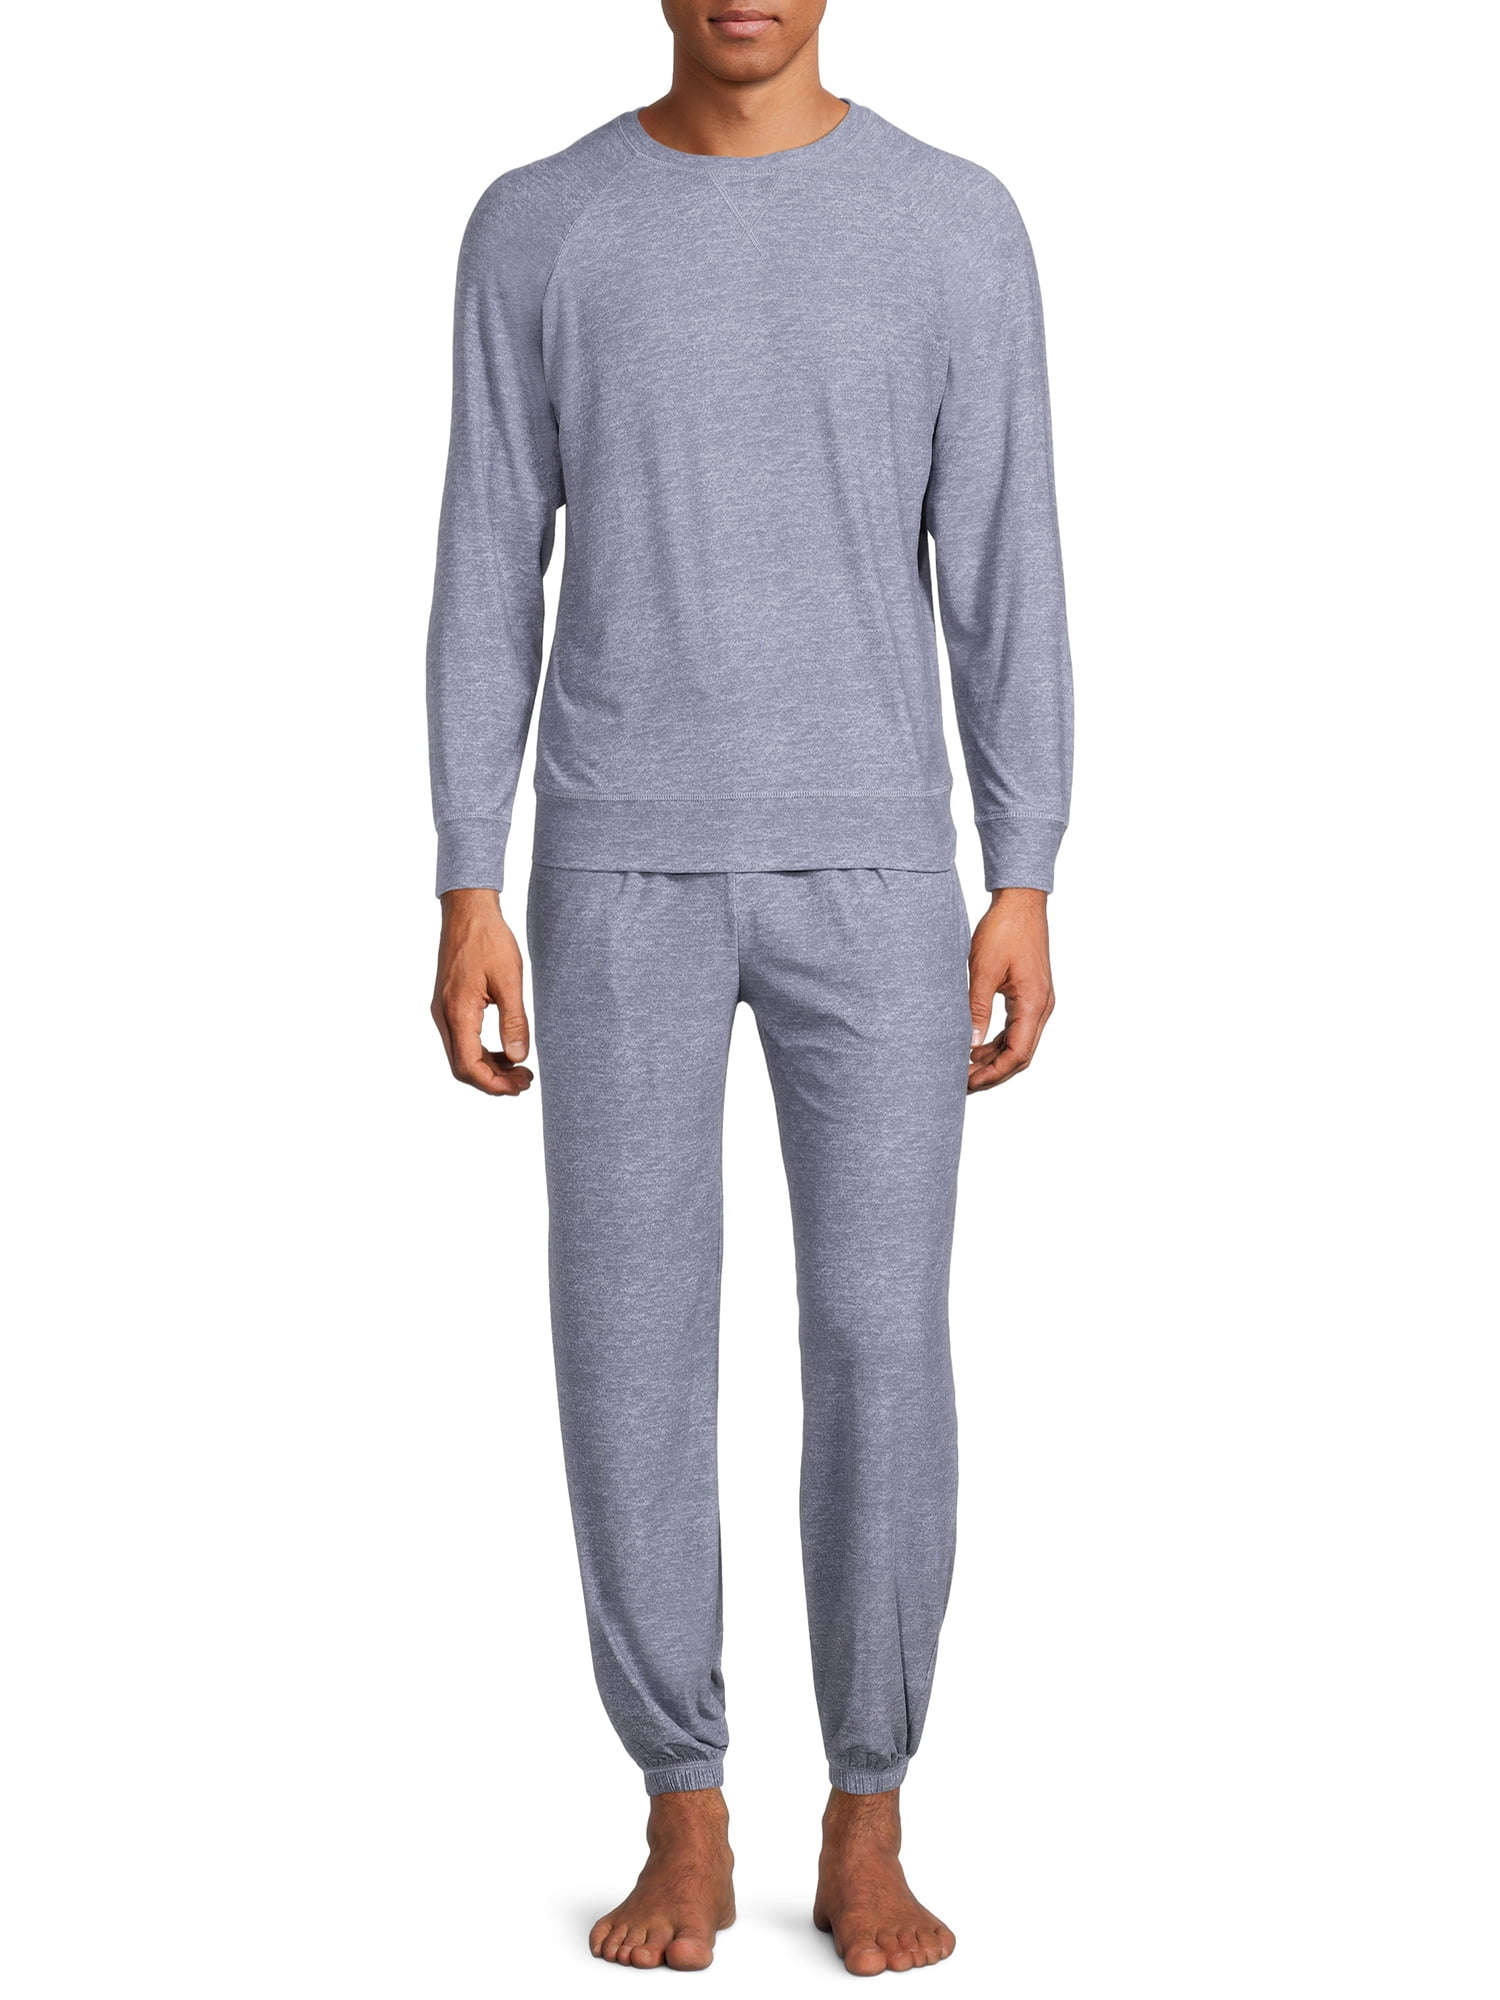 ANDE Men's Raglan Long Sleeve Top & Jogger Sleepwear Set, Sizes S-2XL ...